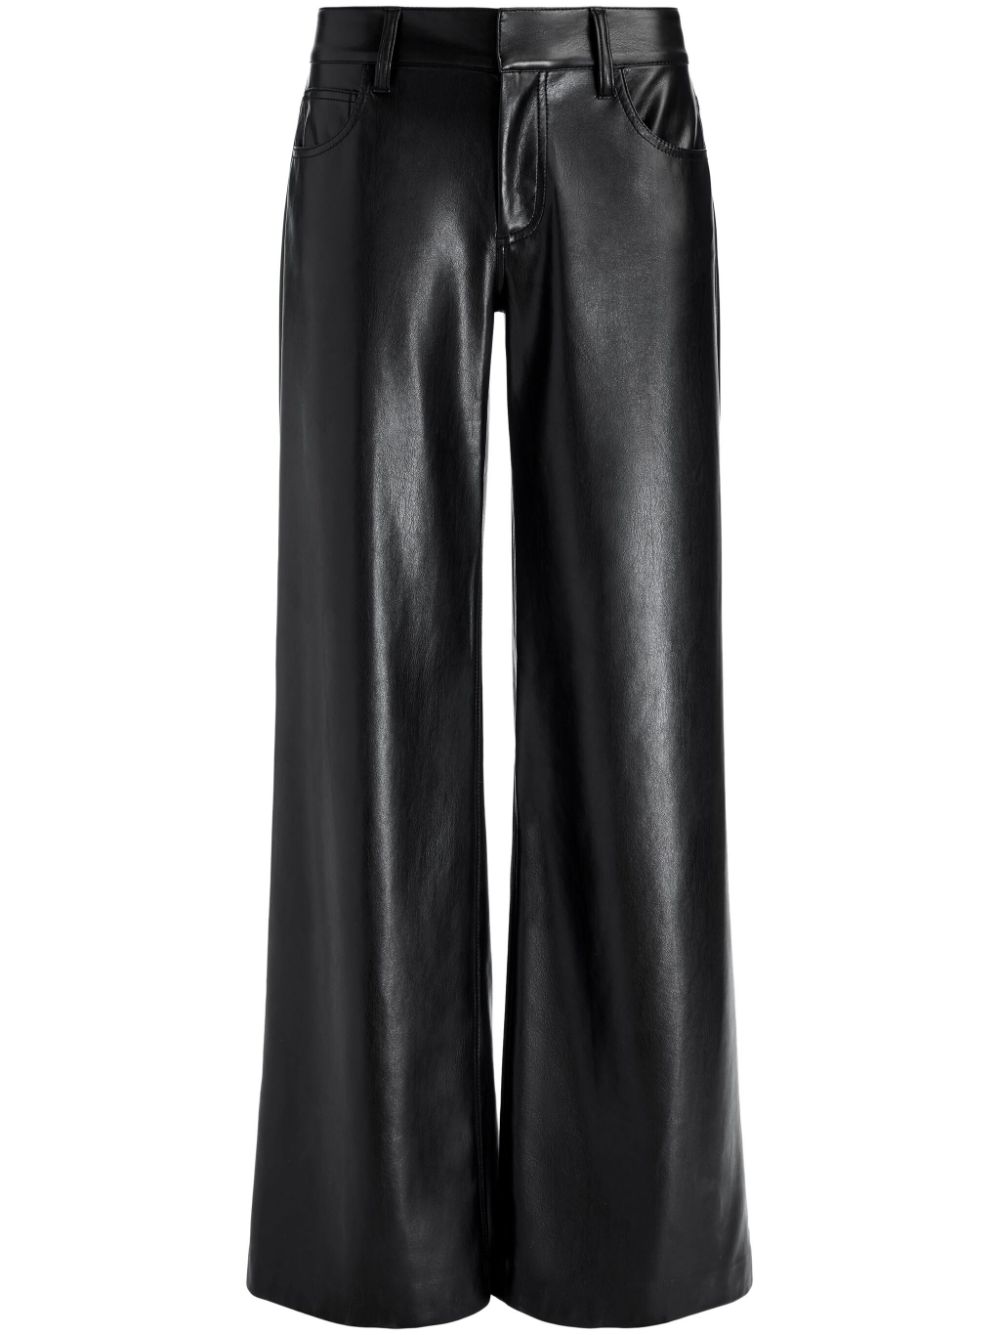 alice + olivia Trish low-rise flared trousers - Black